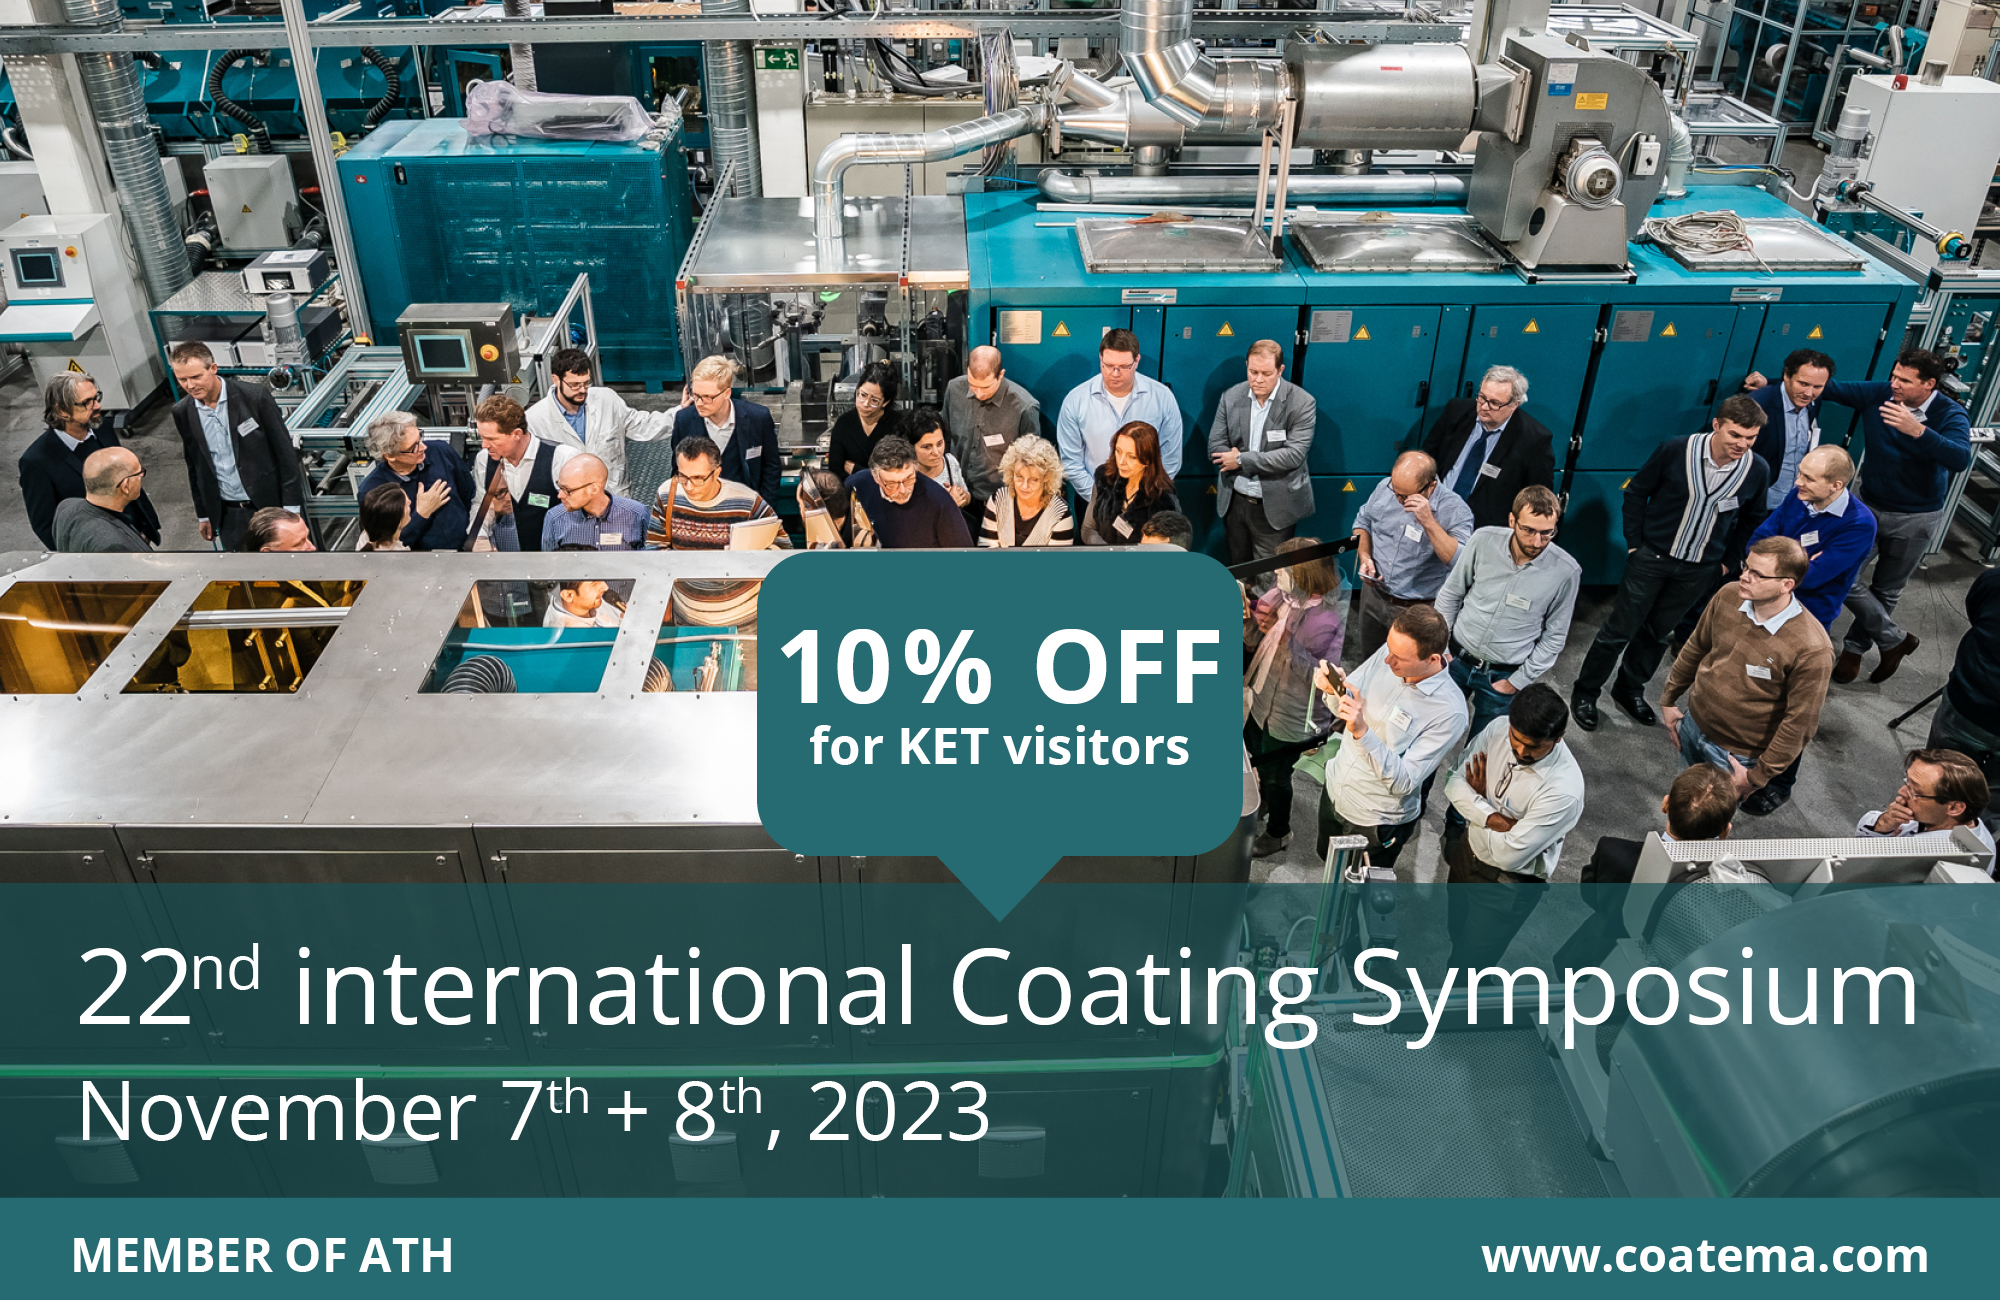 22nd international Coating Symposium for coating, printing and laminating